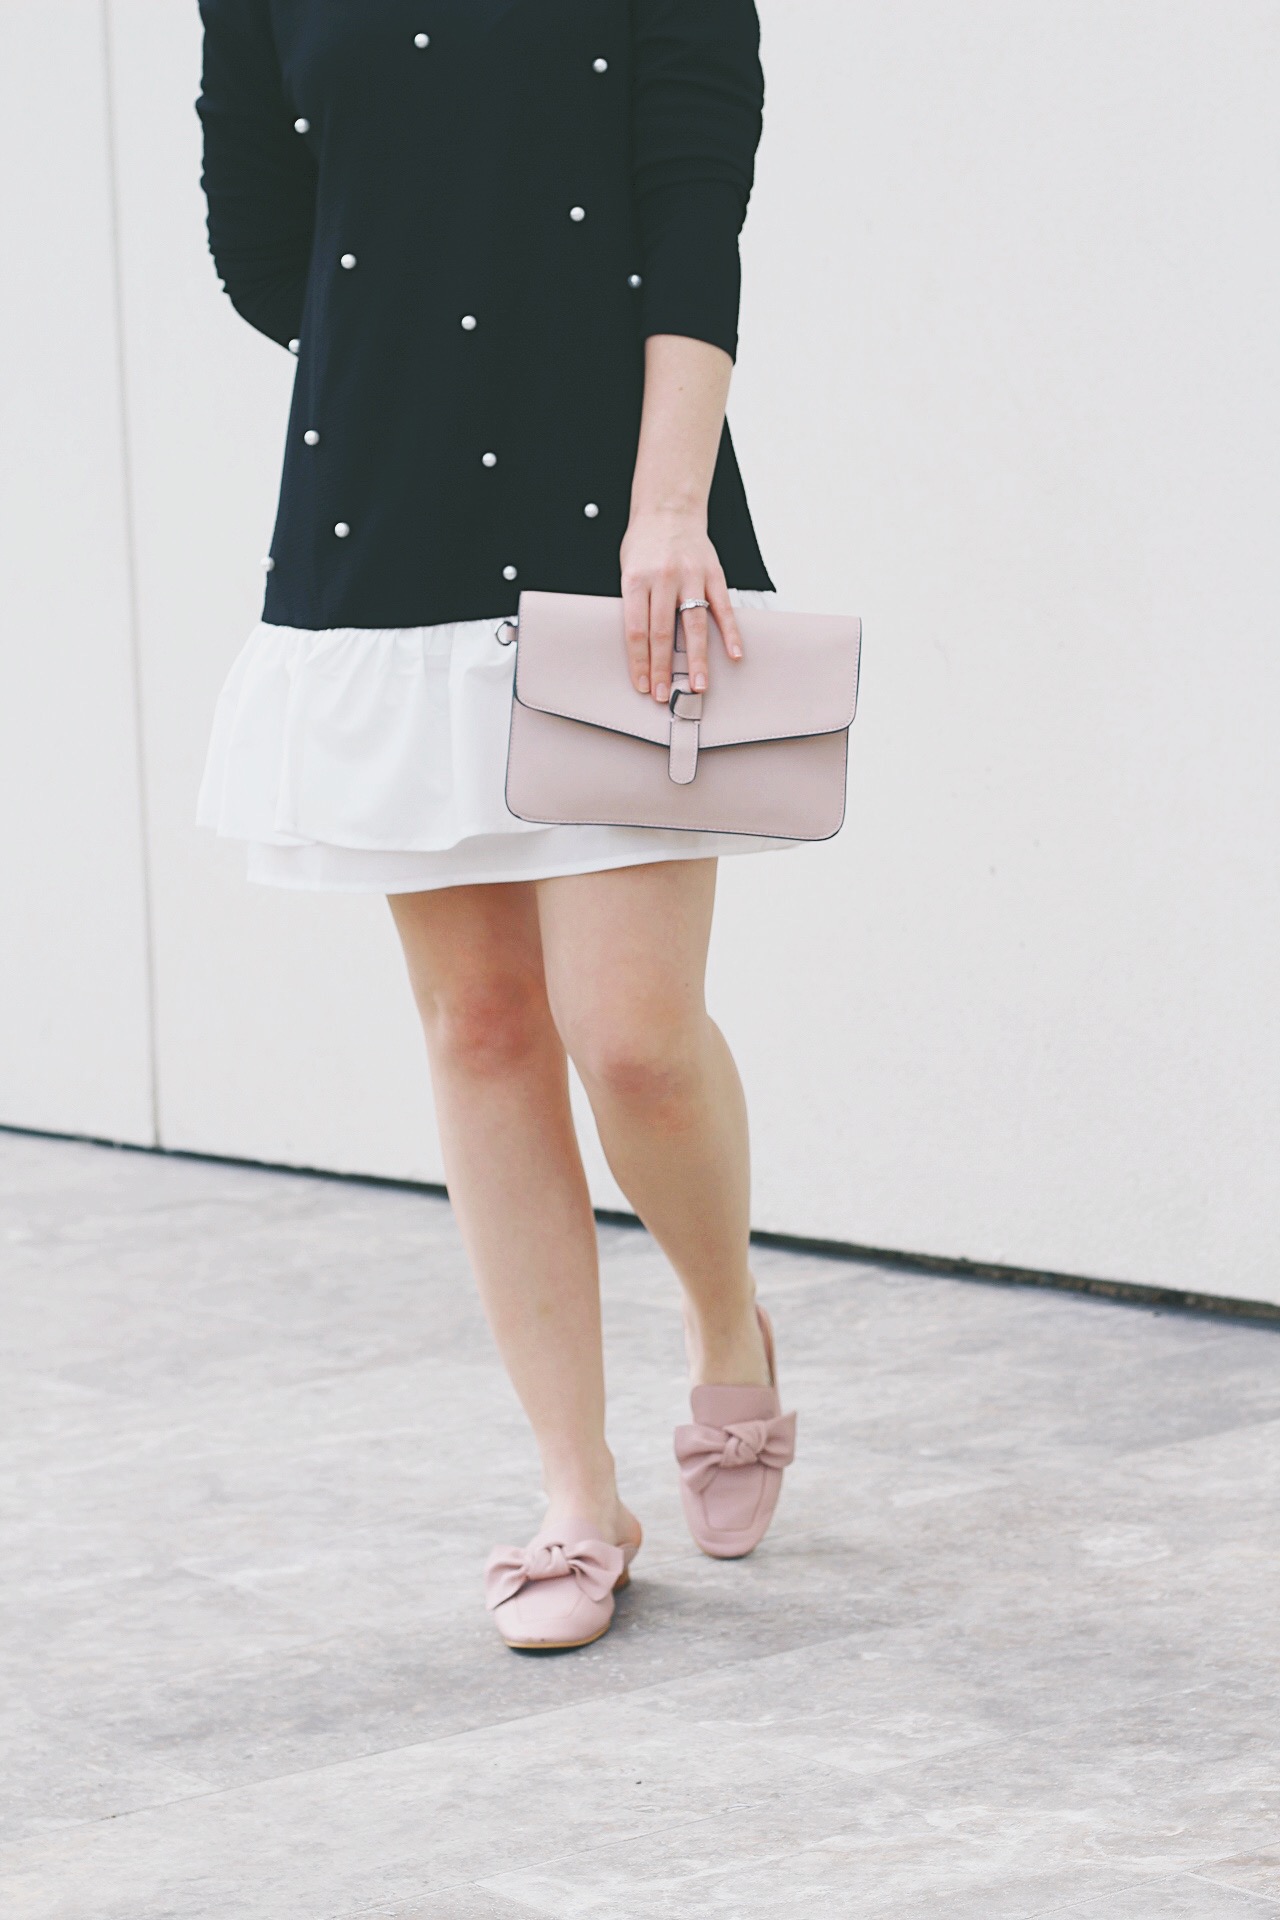 SheIn Pearl Dress by Houston fashion blogger Gracefully Sassy